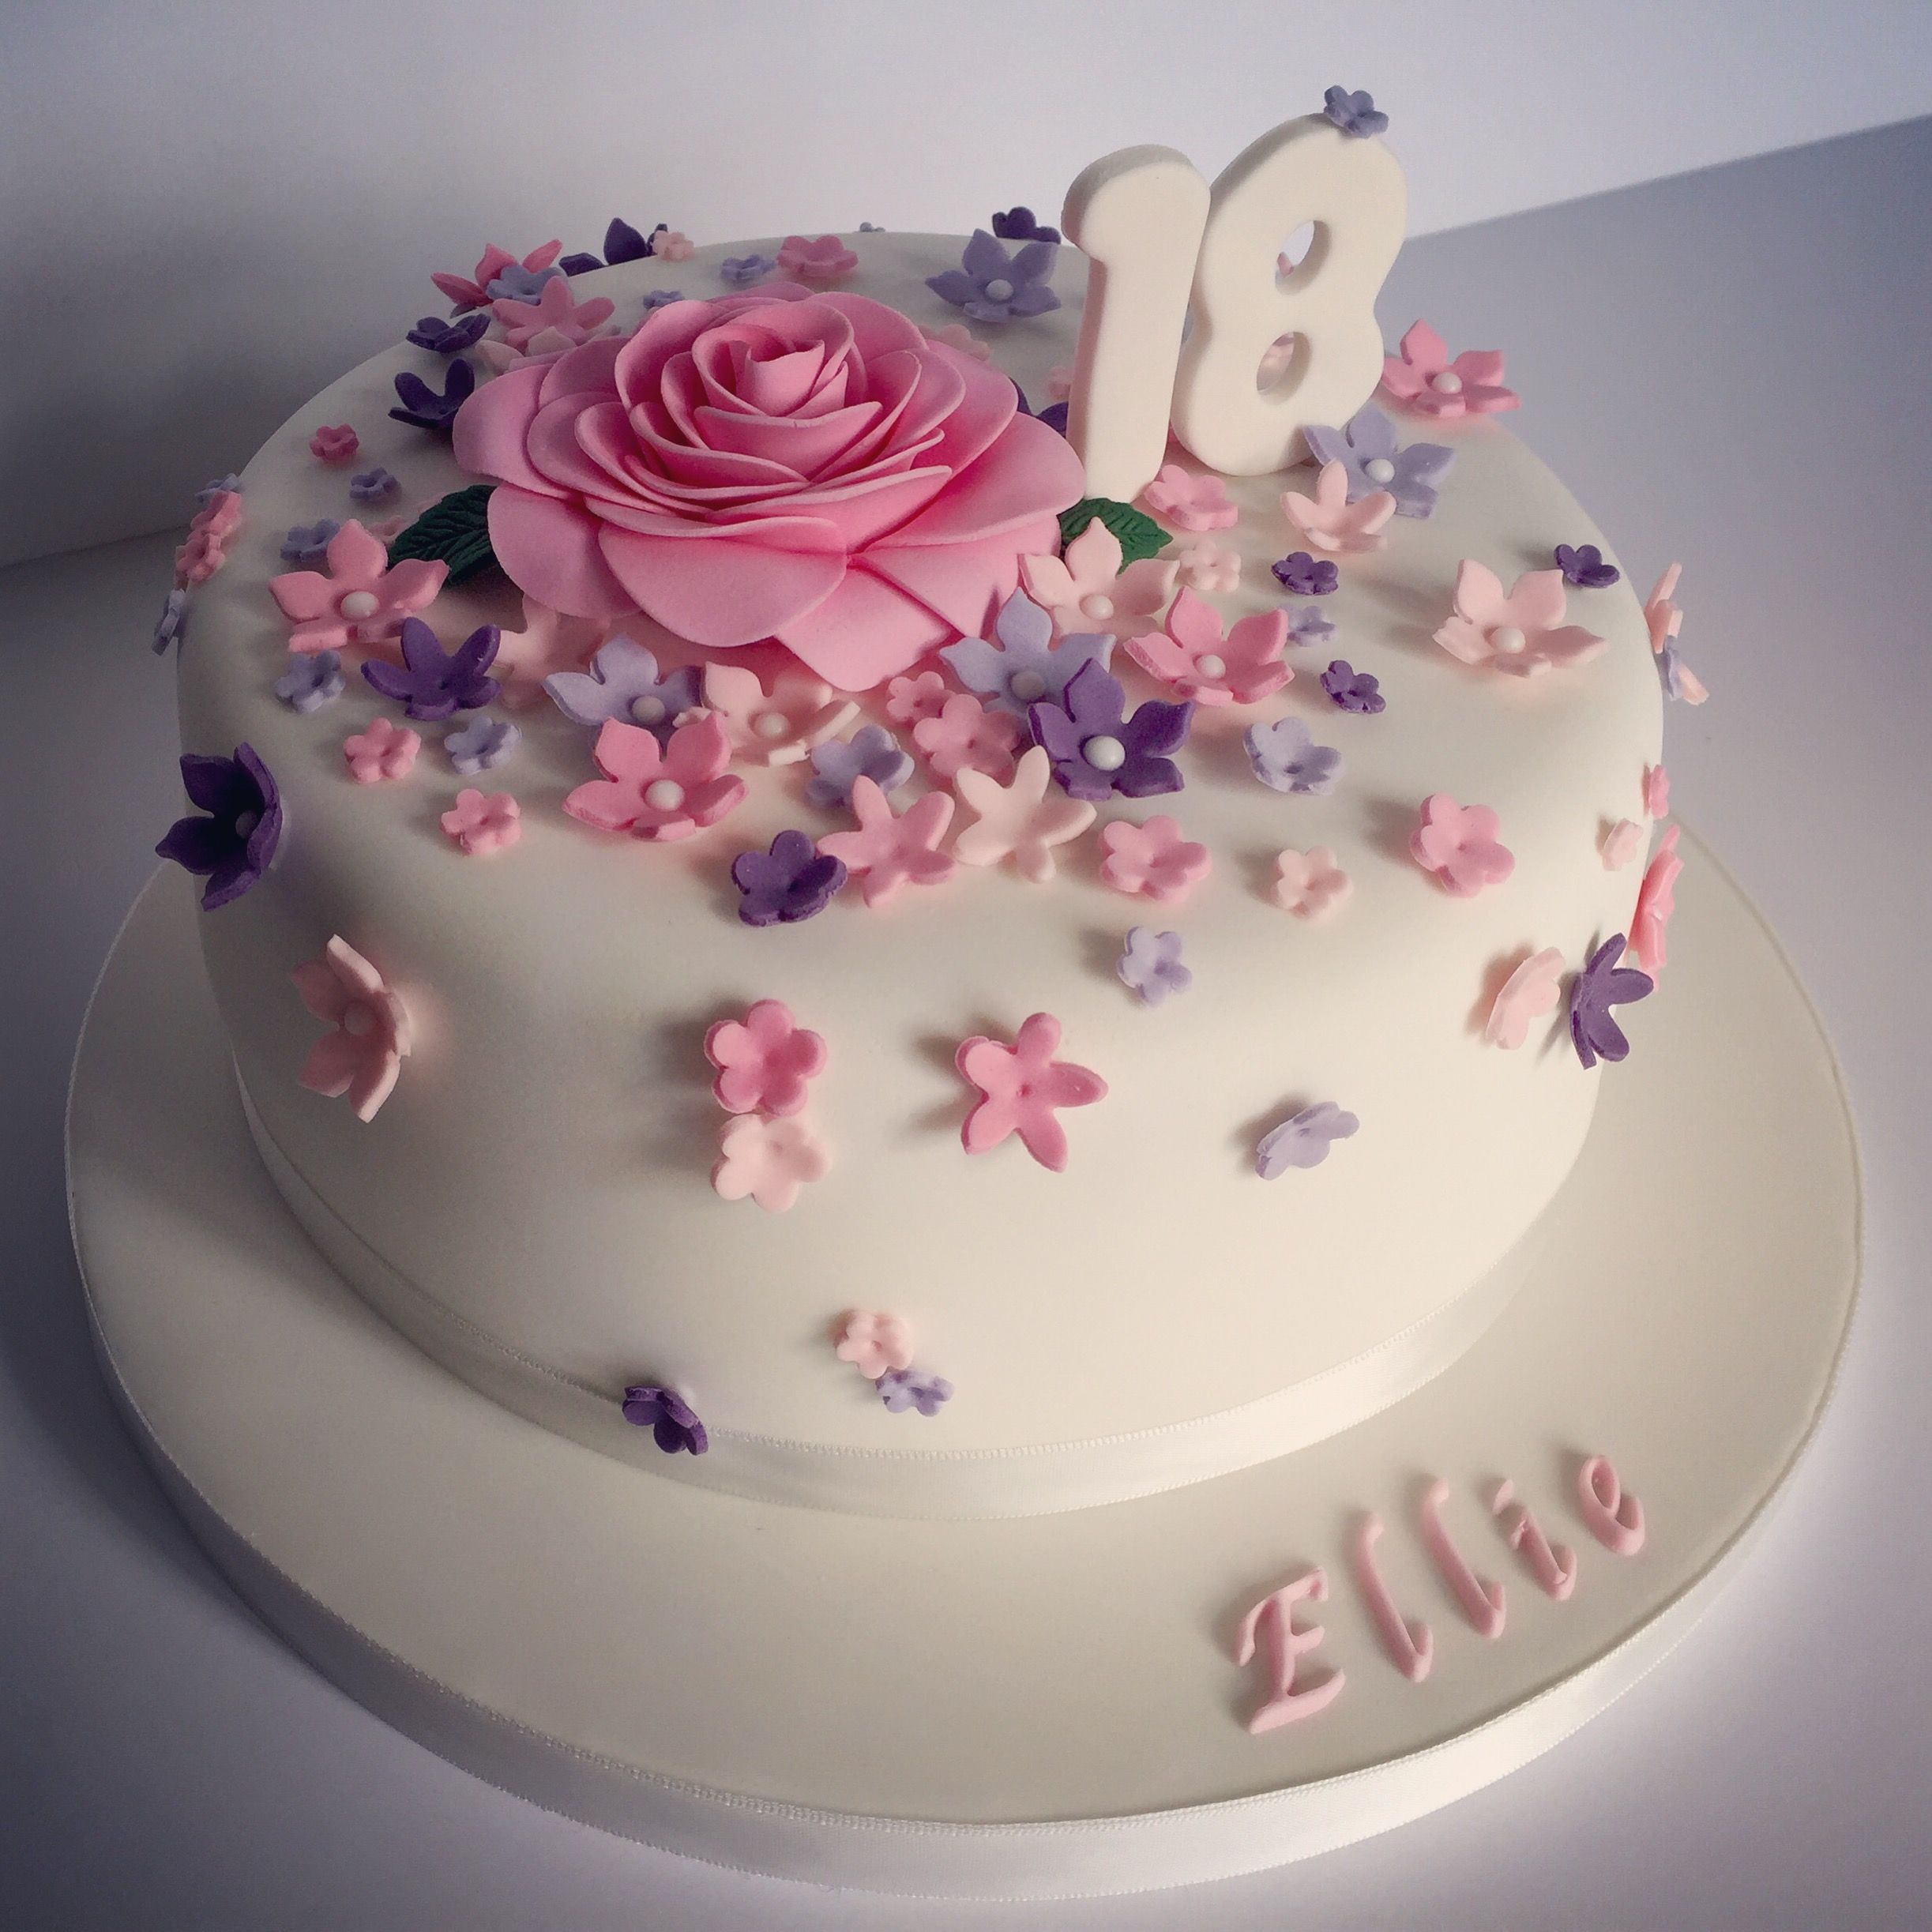 Cake for birthday photo